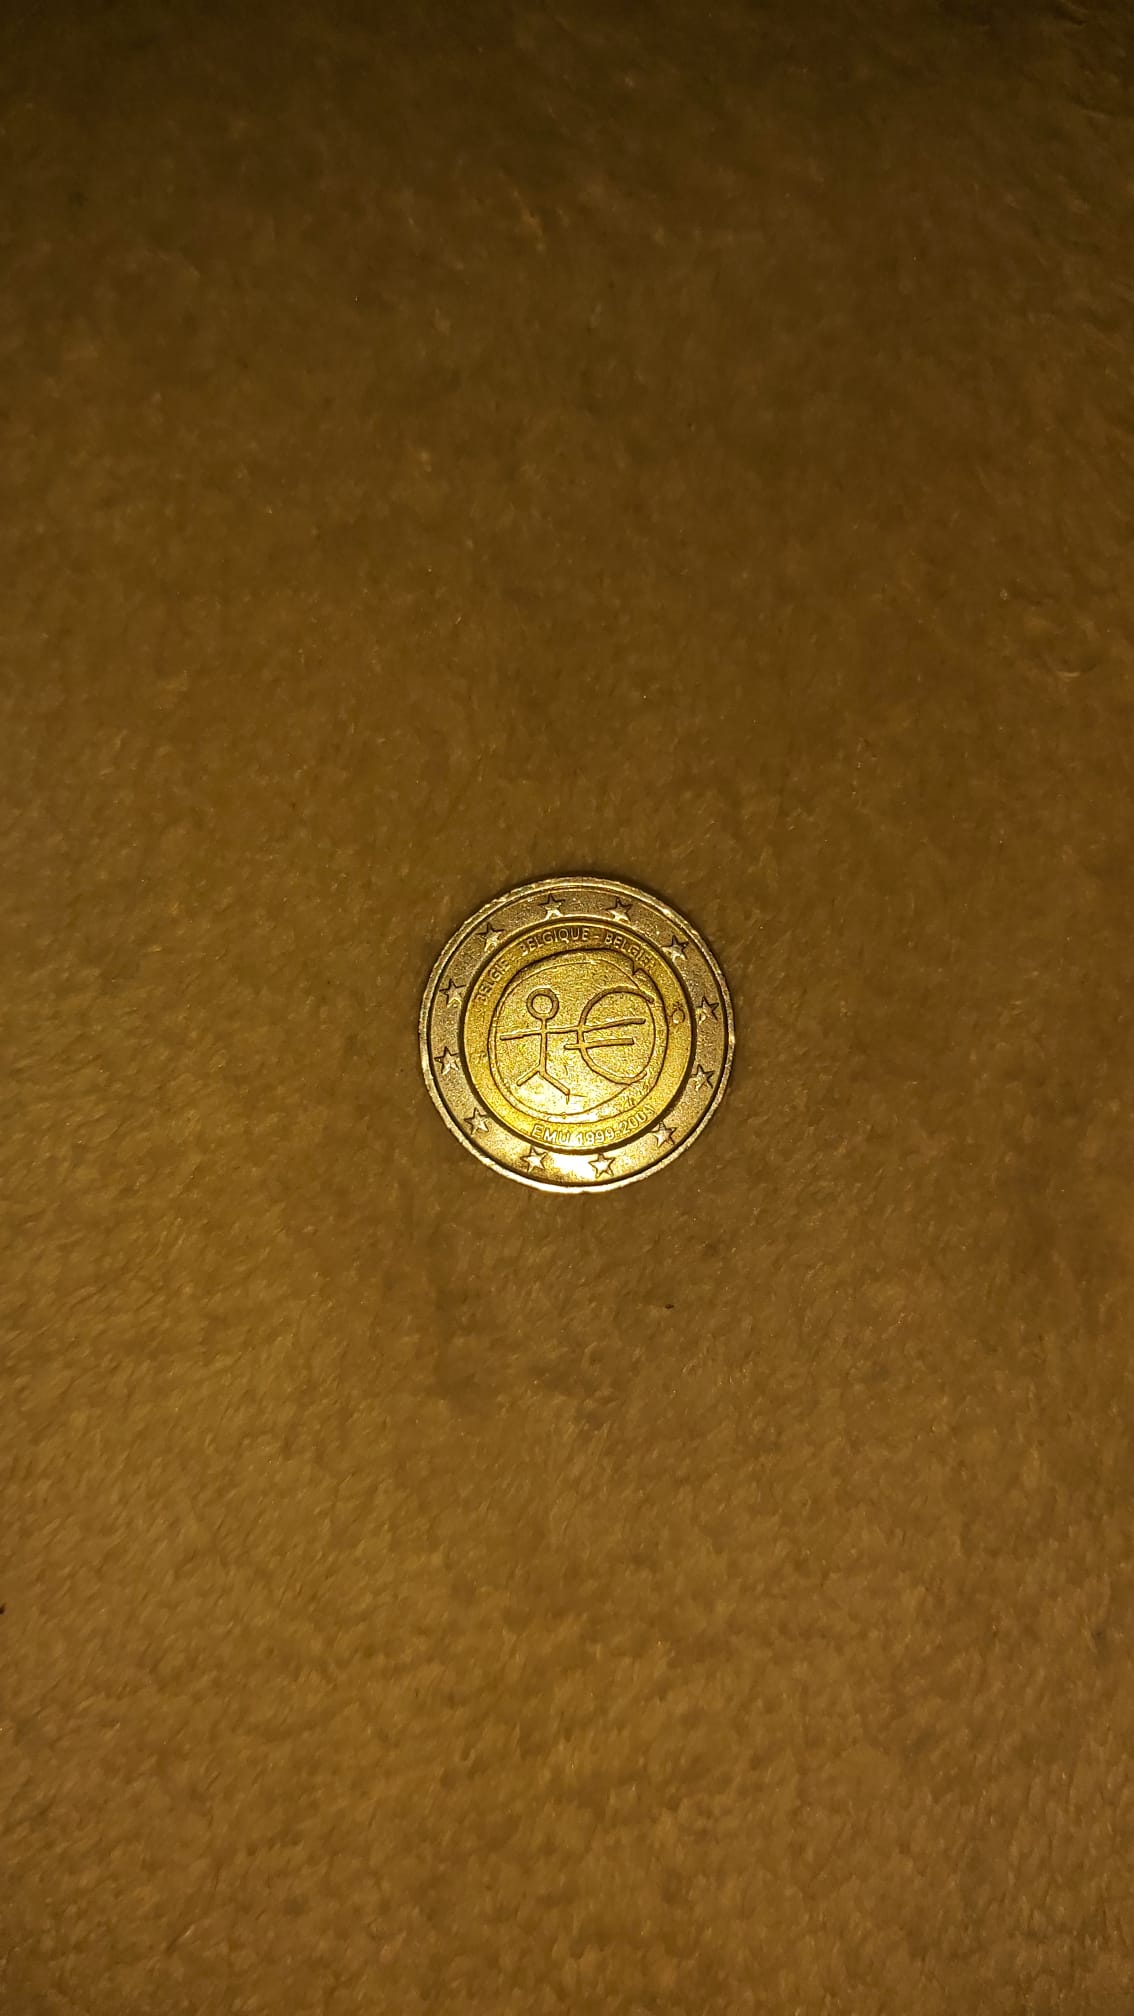 Belgian 2 Euro coin – Belgische 2 Euro Emu Münze, Fehlprägung